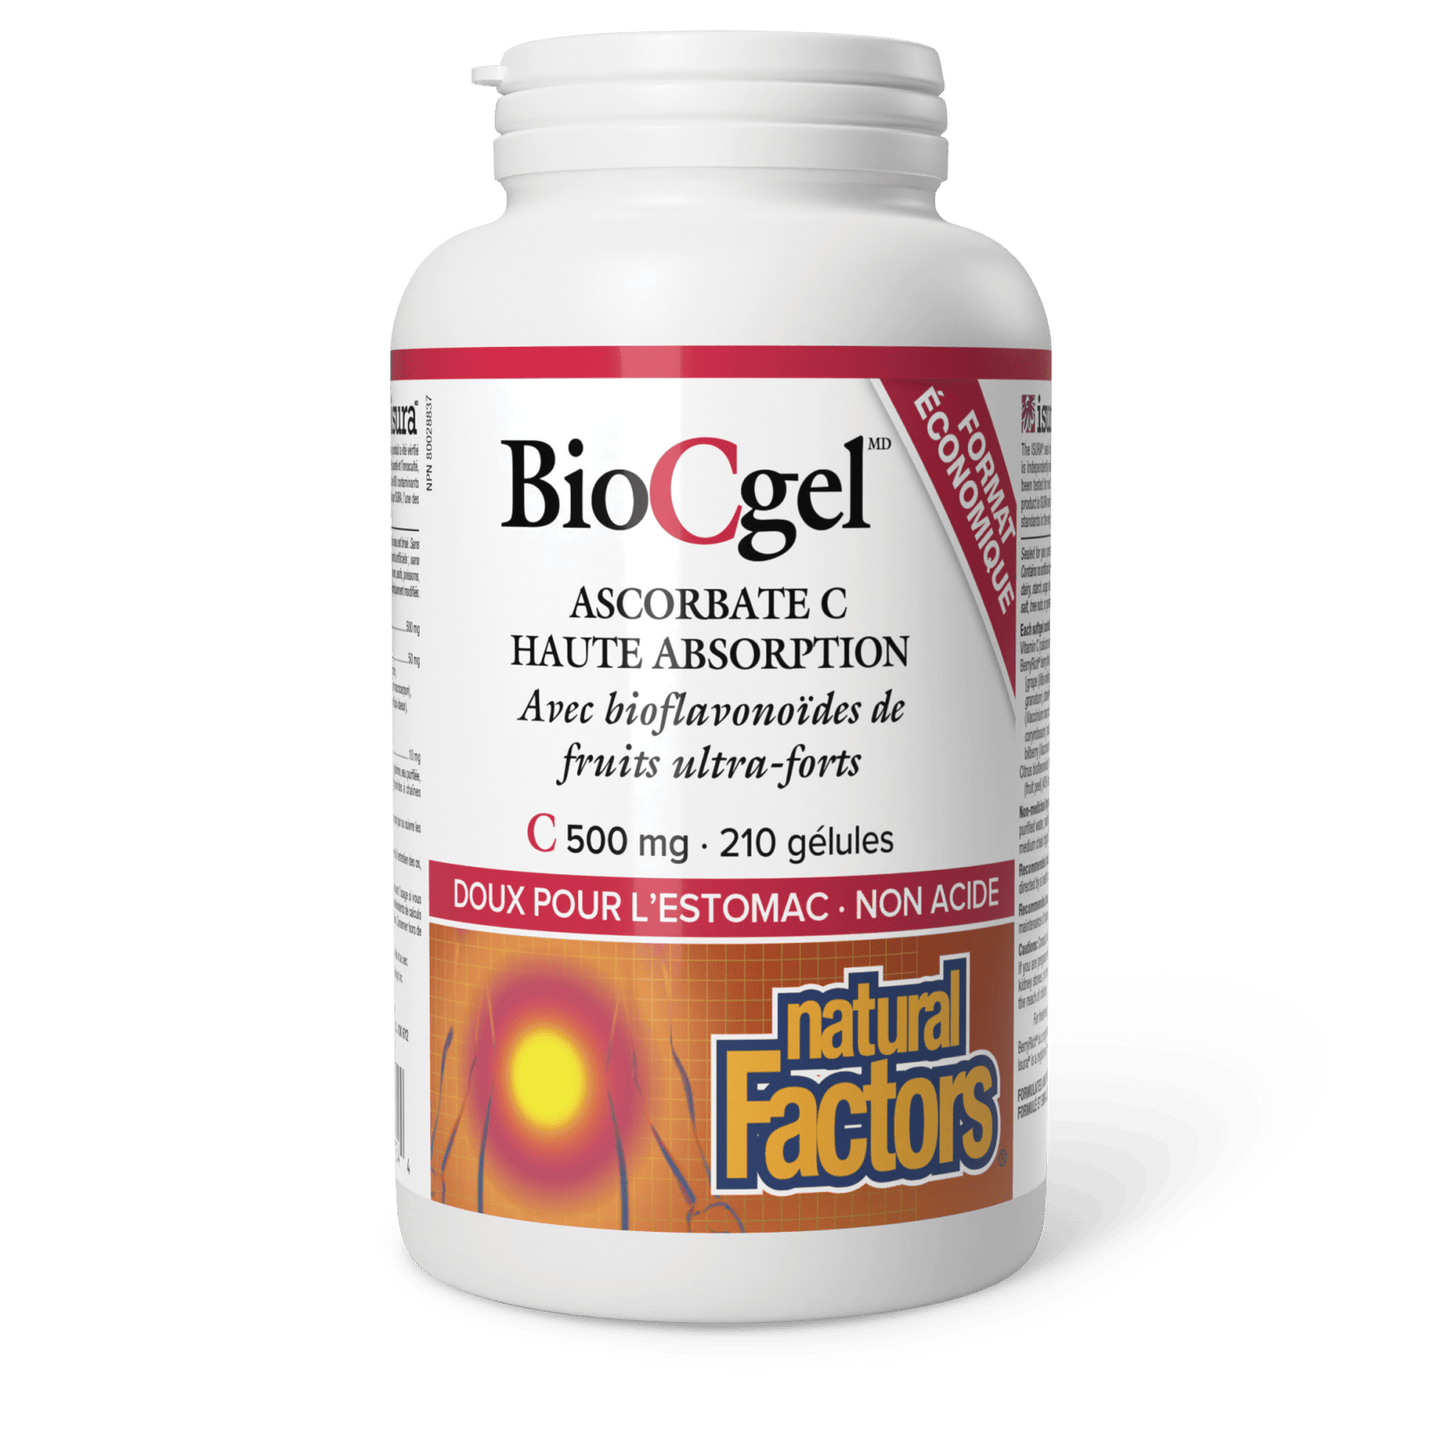 BioCgel Ascorbate C Haute absorption 500 mg, Natural Factors|v|image|8054